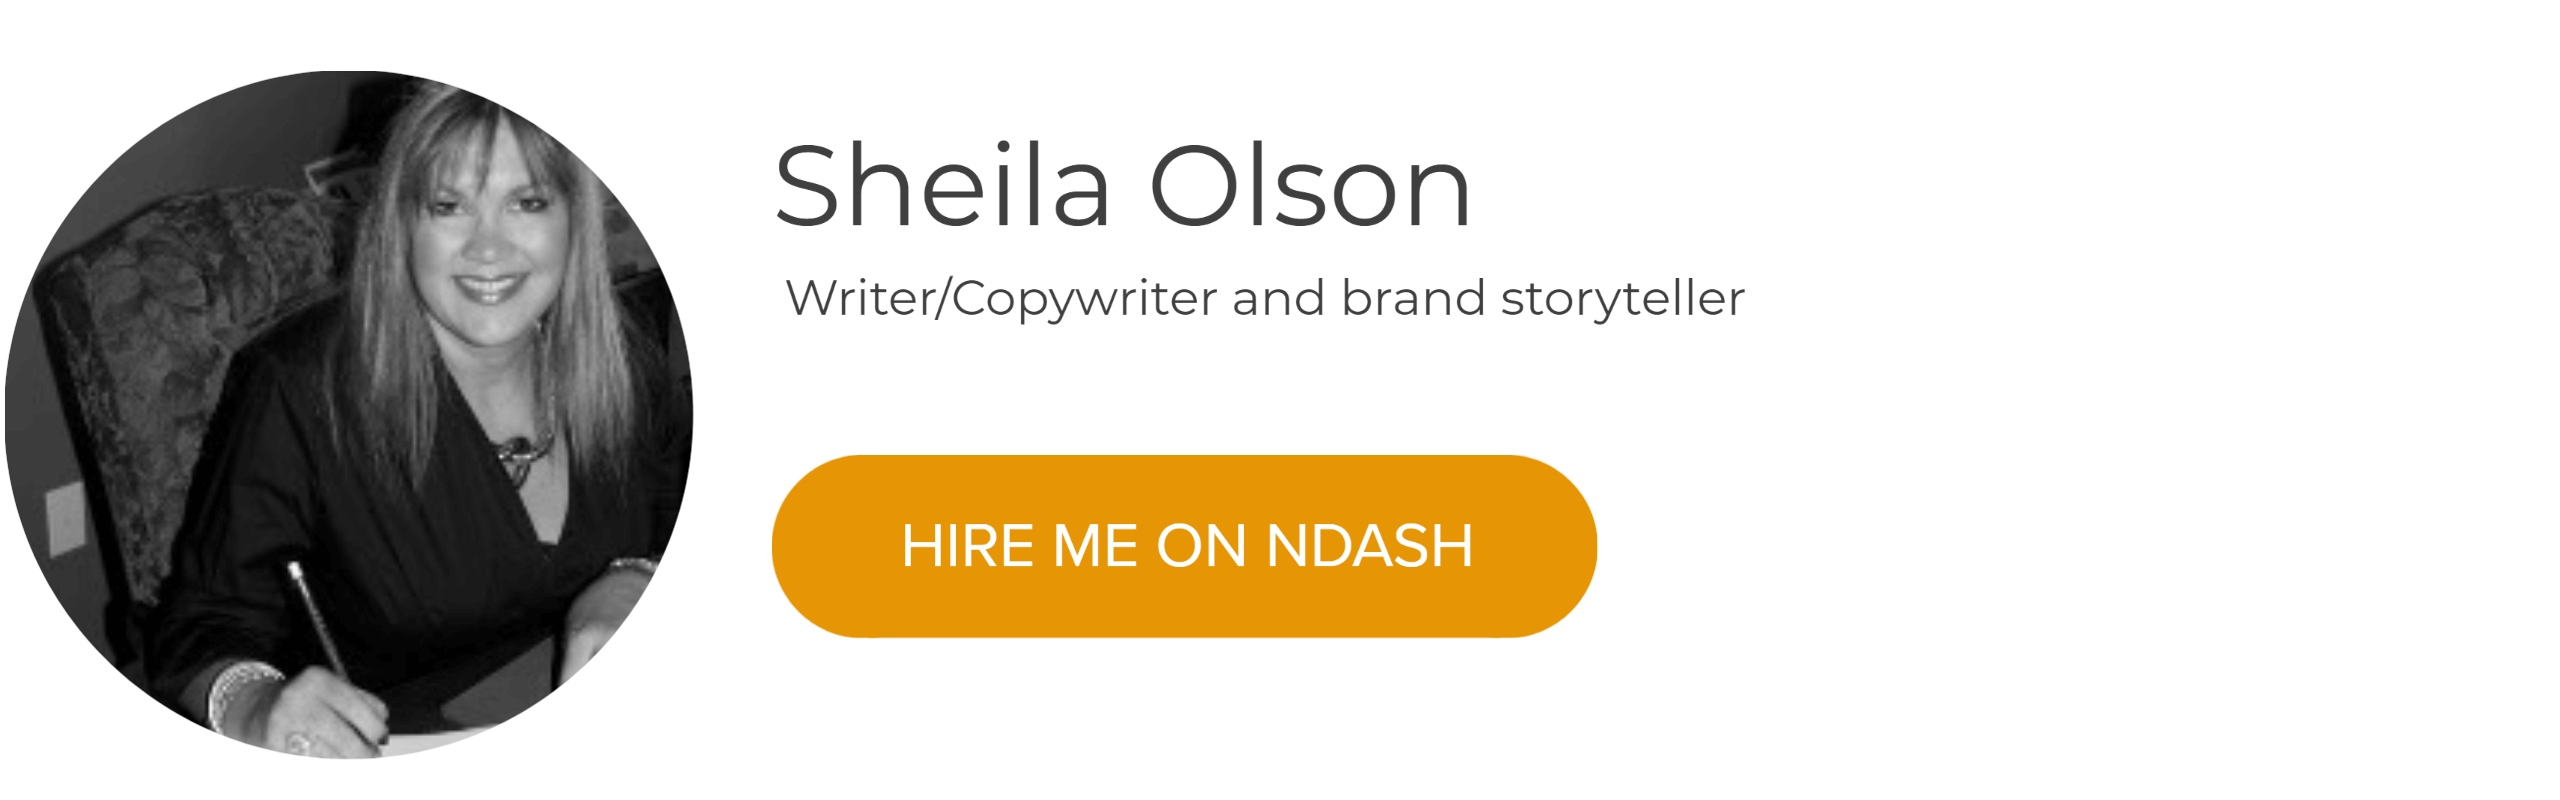 Sheila Olson: Writer, Copywriter & Brand Storyteller